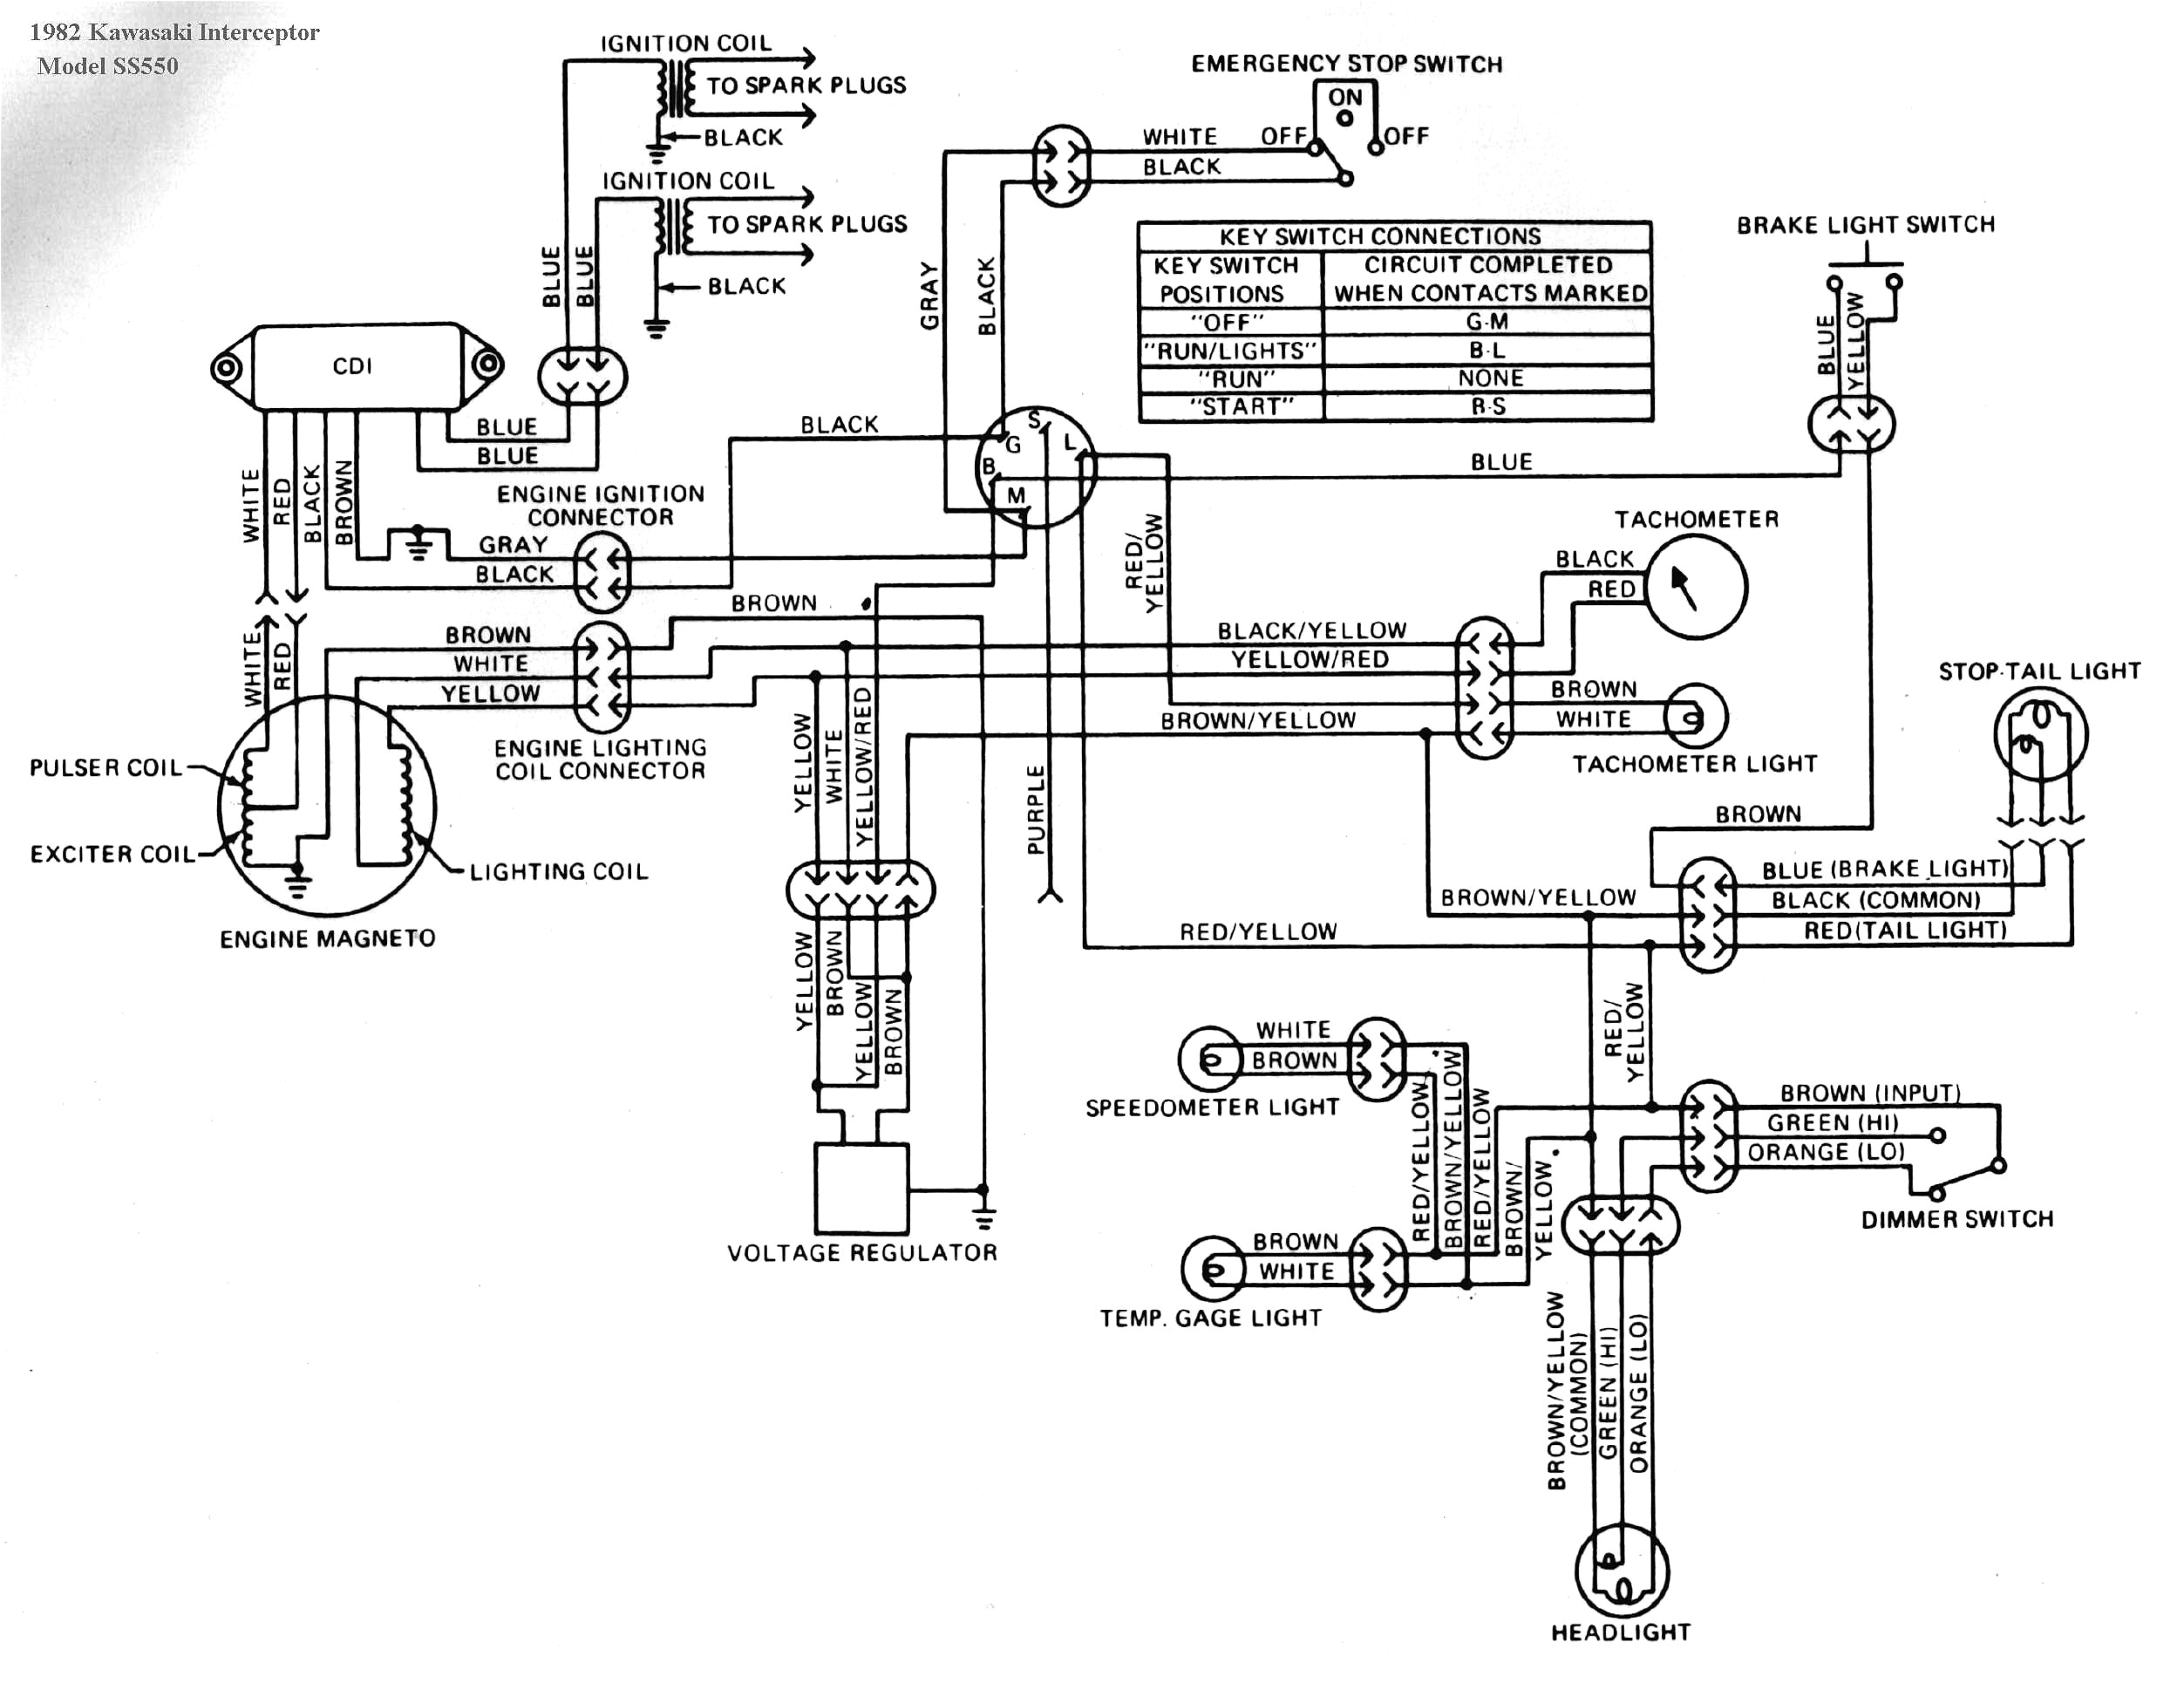 diagrams likewise kawasaki bayou 220 wiring diagram on kawasaki 1998 kawasaki bayou 220 wiring diagram wiring